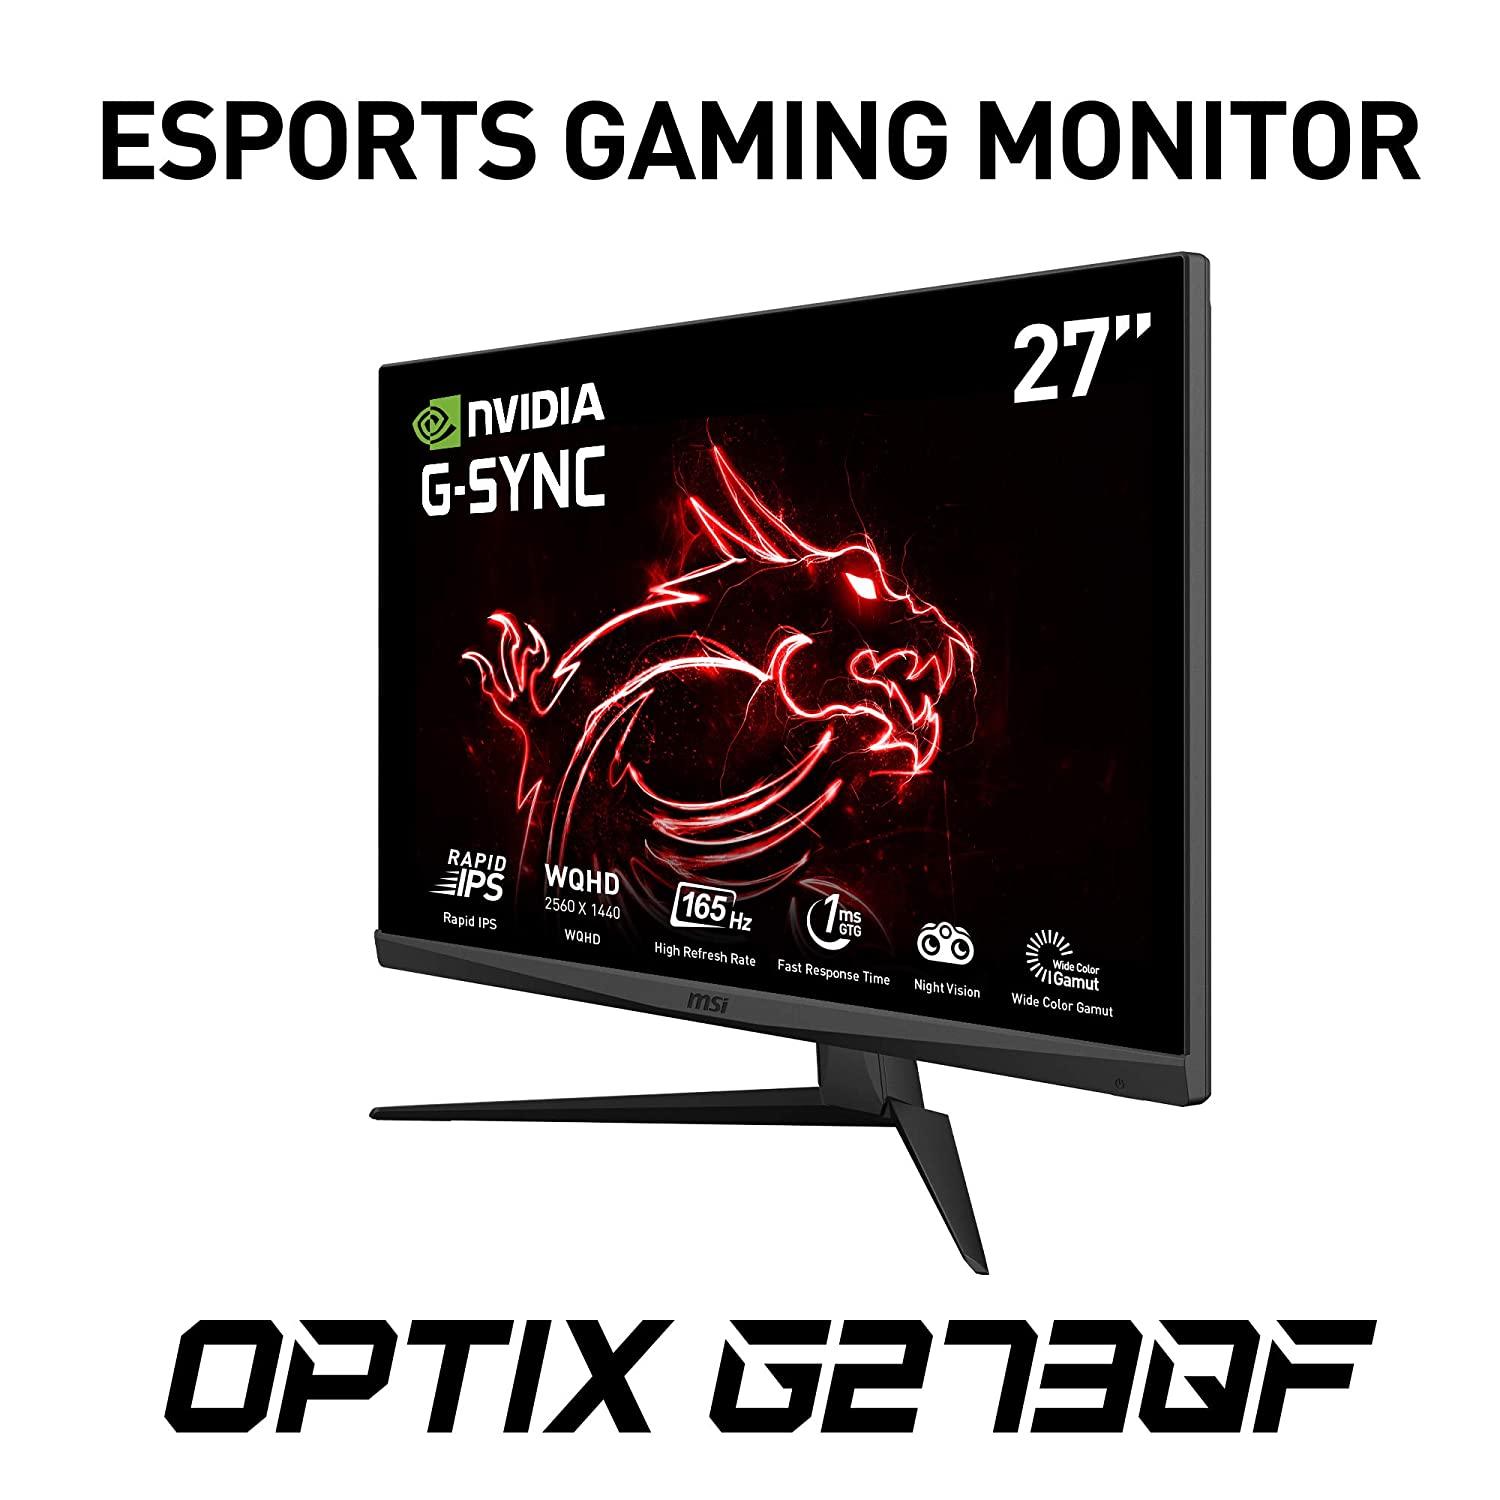 MSI Optix G273QF Esports Gaming IPS Monitor - 27 inch, 16:9 WQHD (2560x1440) Pixels, Rapid IPS, 165Hz, 1ms GTG Response Time, Less Blue Light